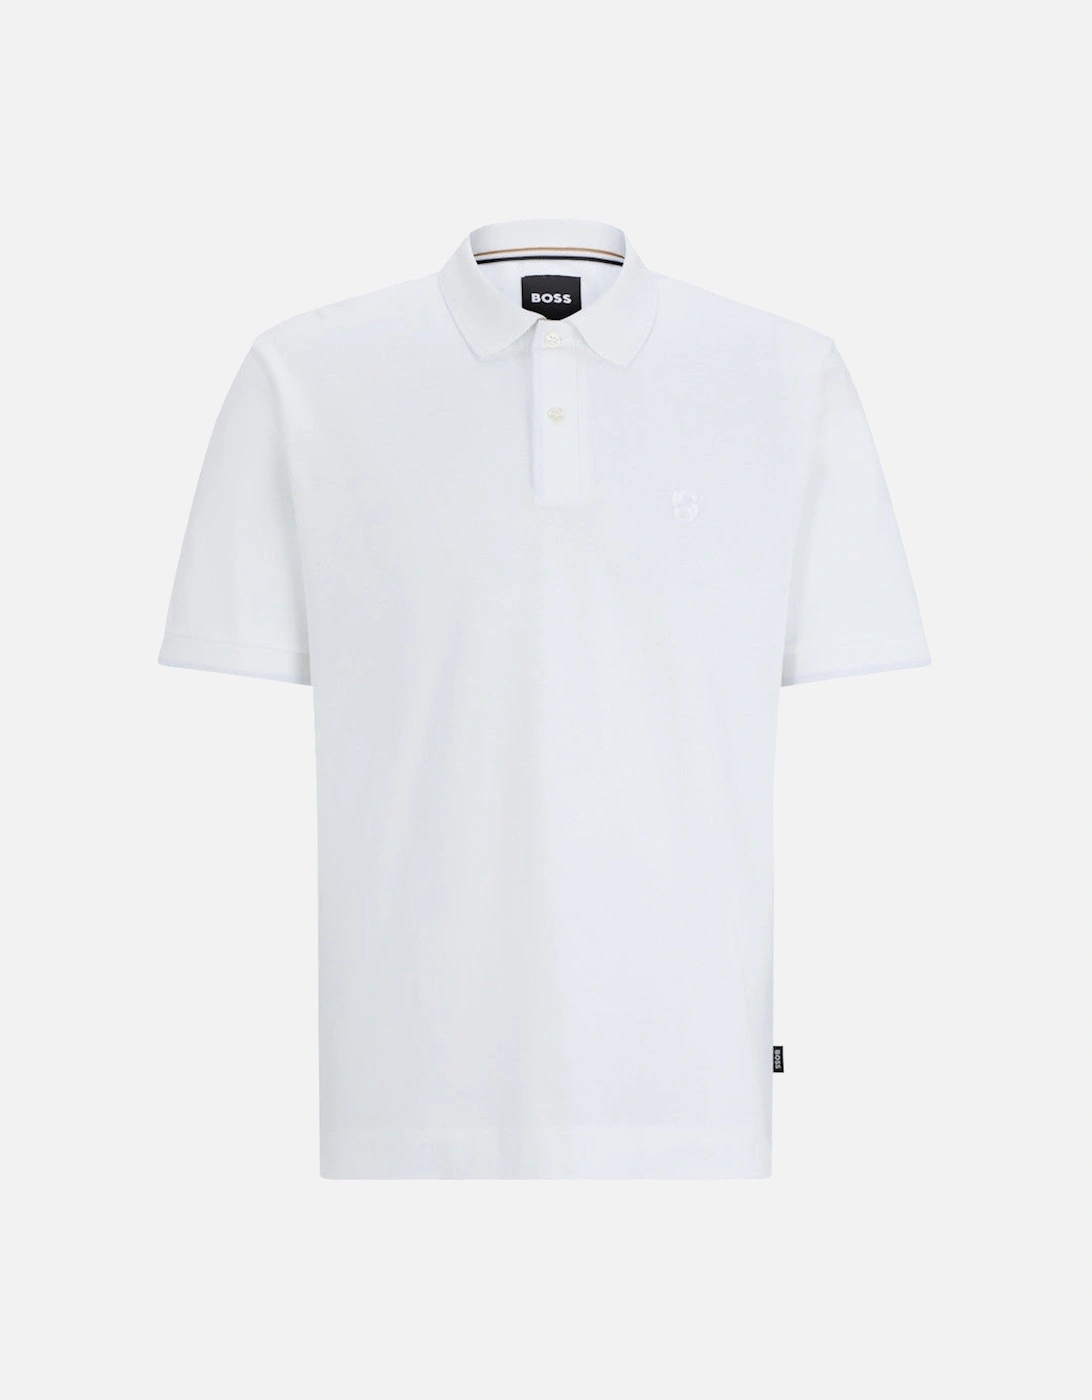 BOSS Black Parlay 210 Polo Shirt 10259941 100 White, 5 of 4